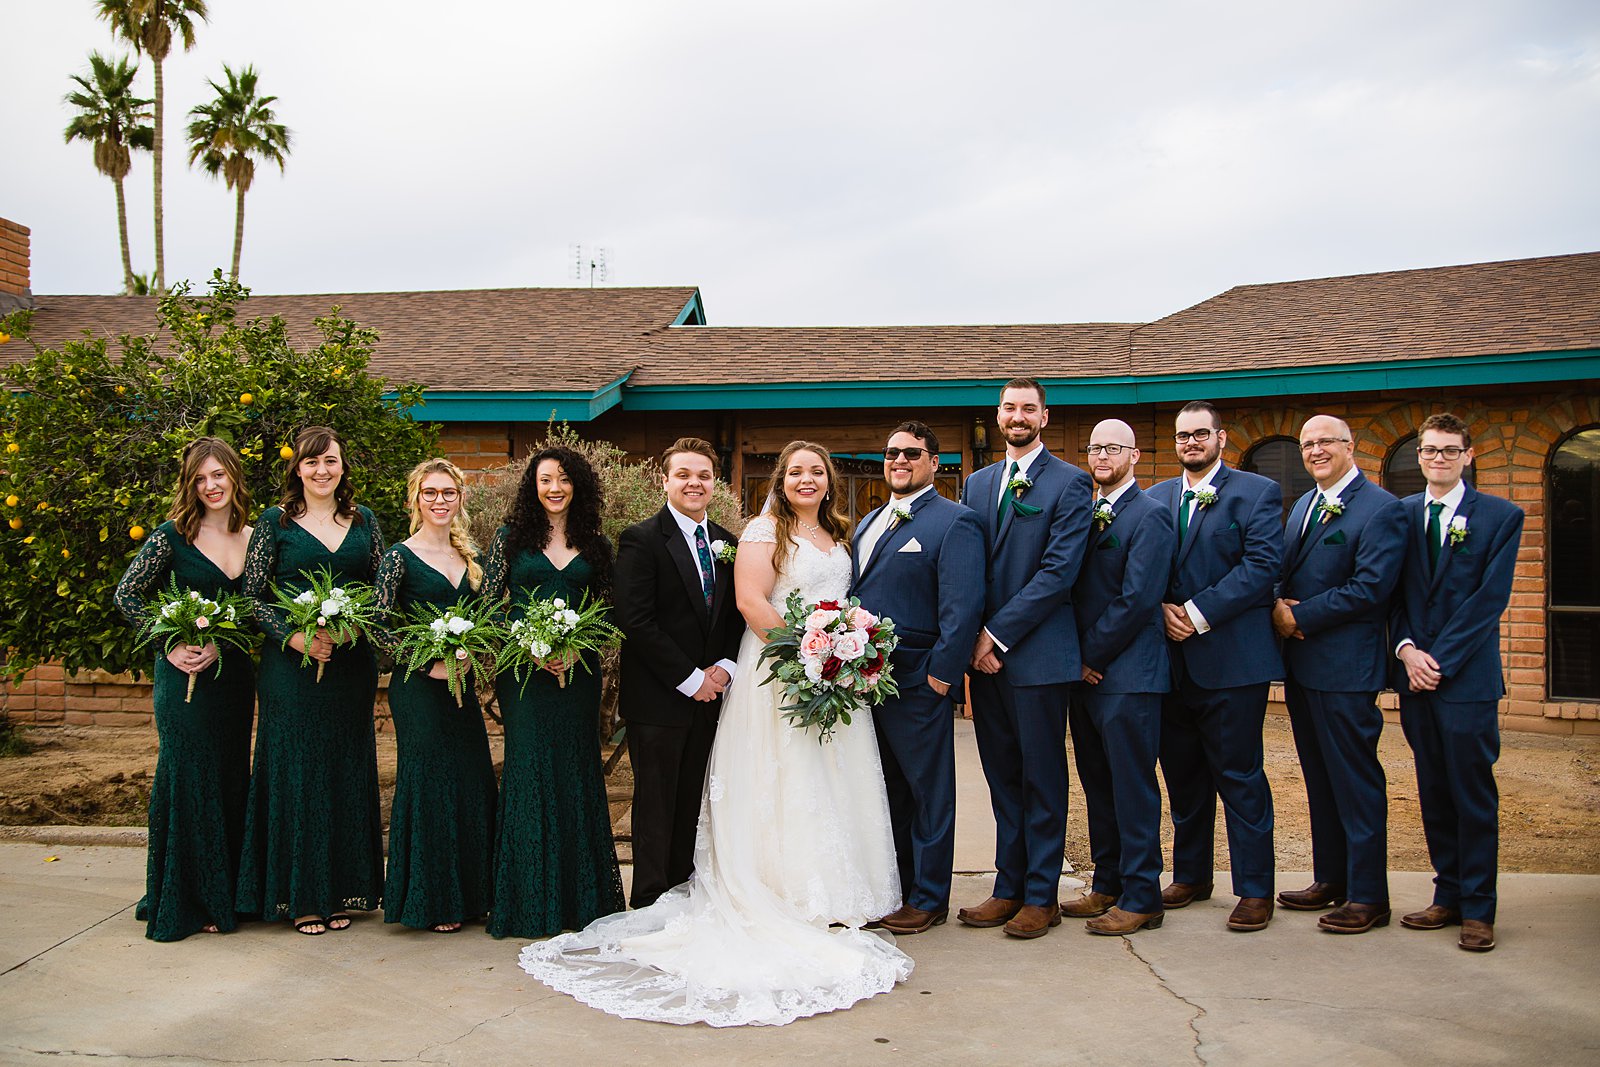 Bridal party together at a Backyard wedding by Arizona wedding photographer PMA Photography.